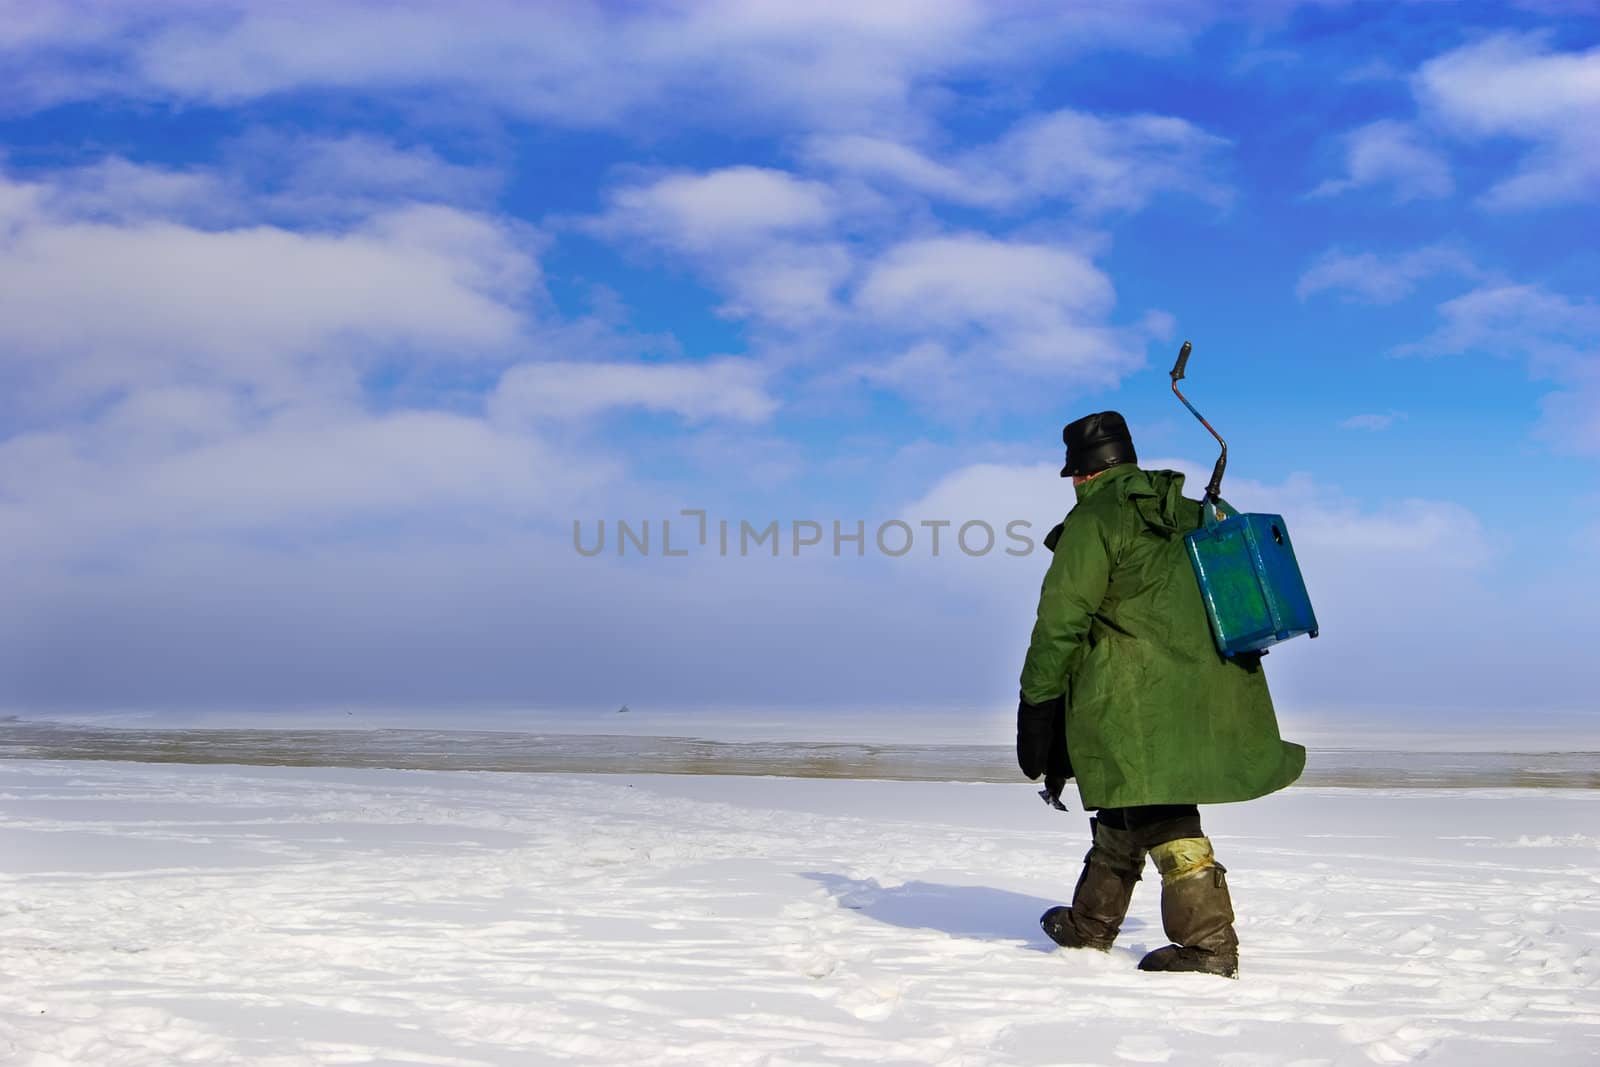 Ice Fisherman going away. Ice fishing - very popular winter hobby in Estonia, Latvia, Lithuania, Russia etc.